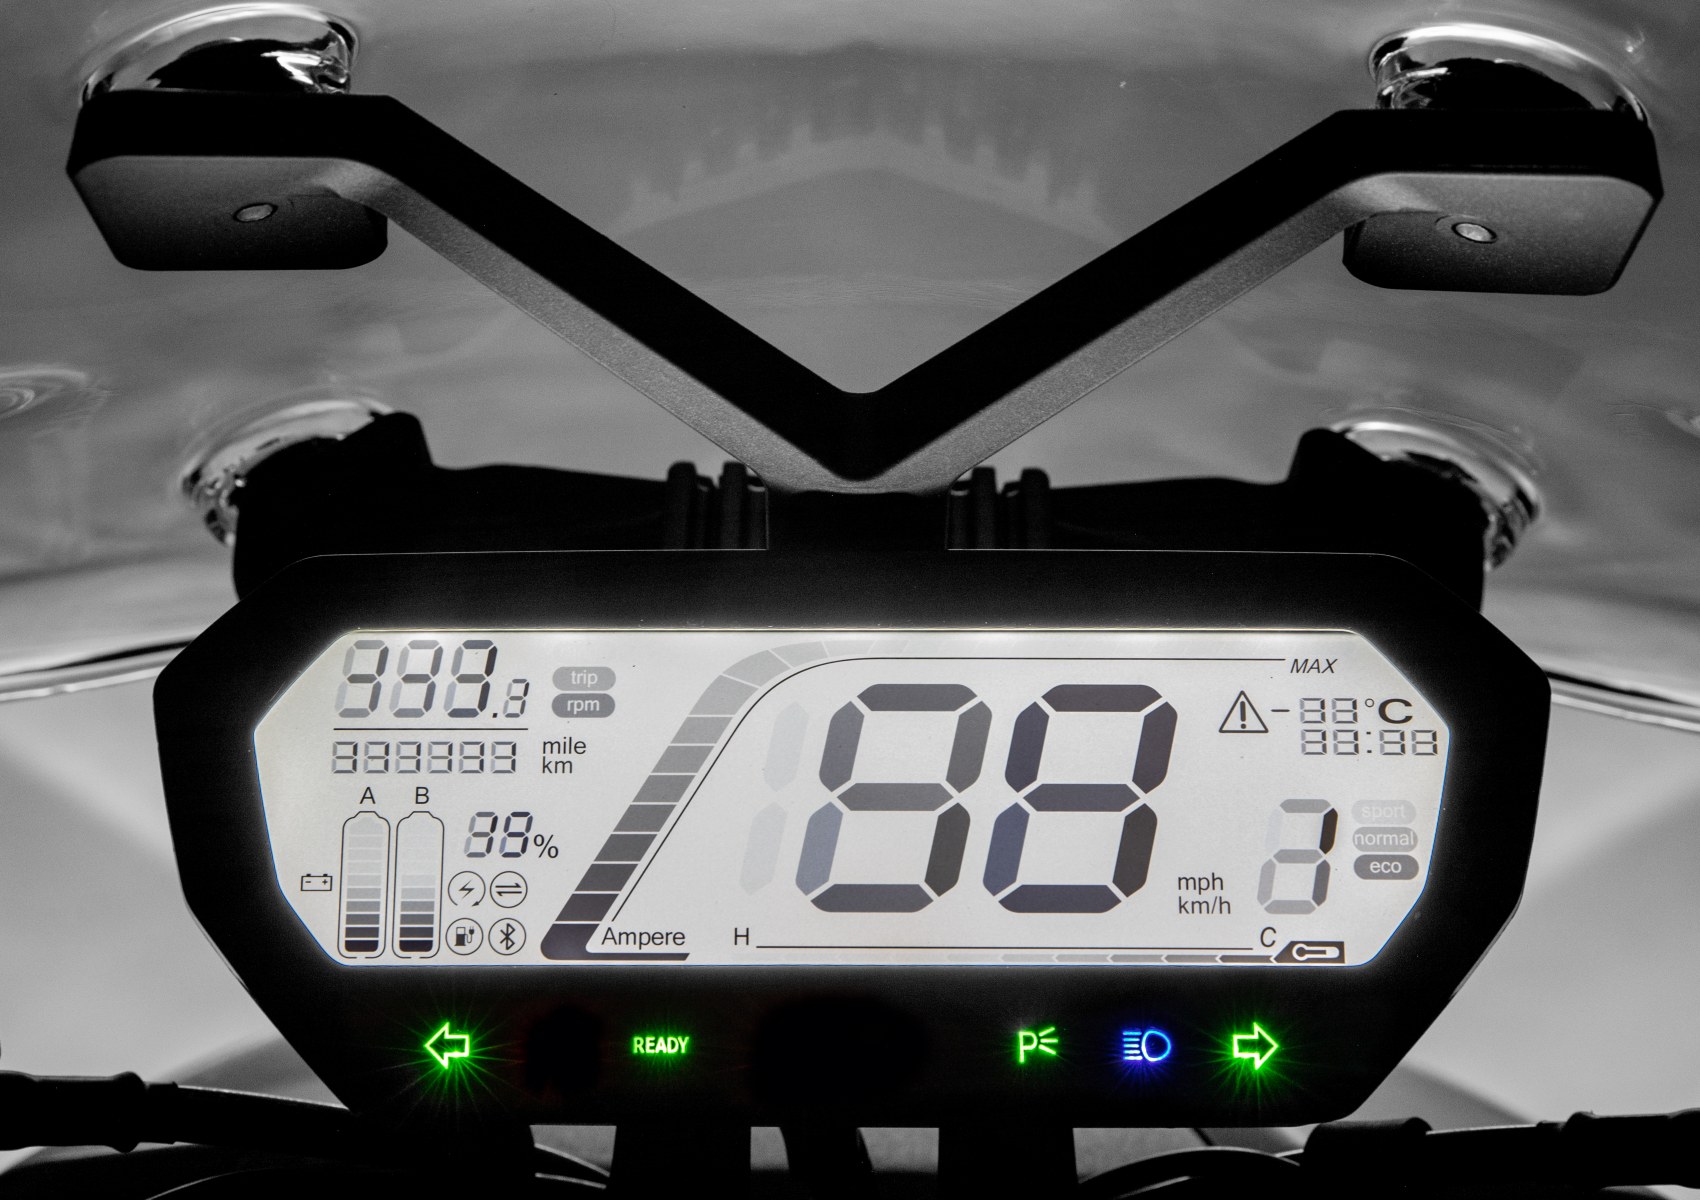 Super Soco CPx electric scooter digital dash display unit